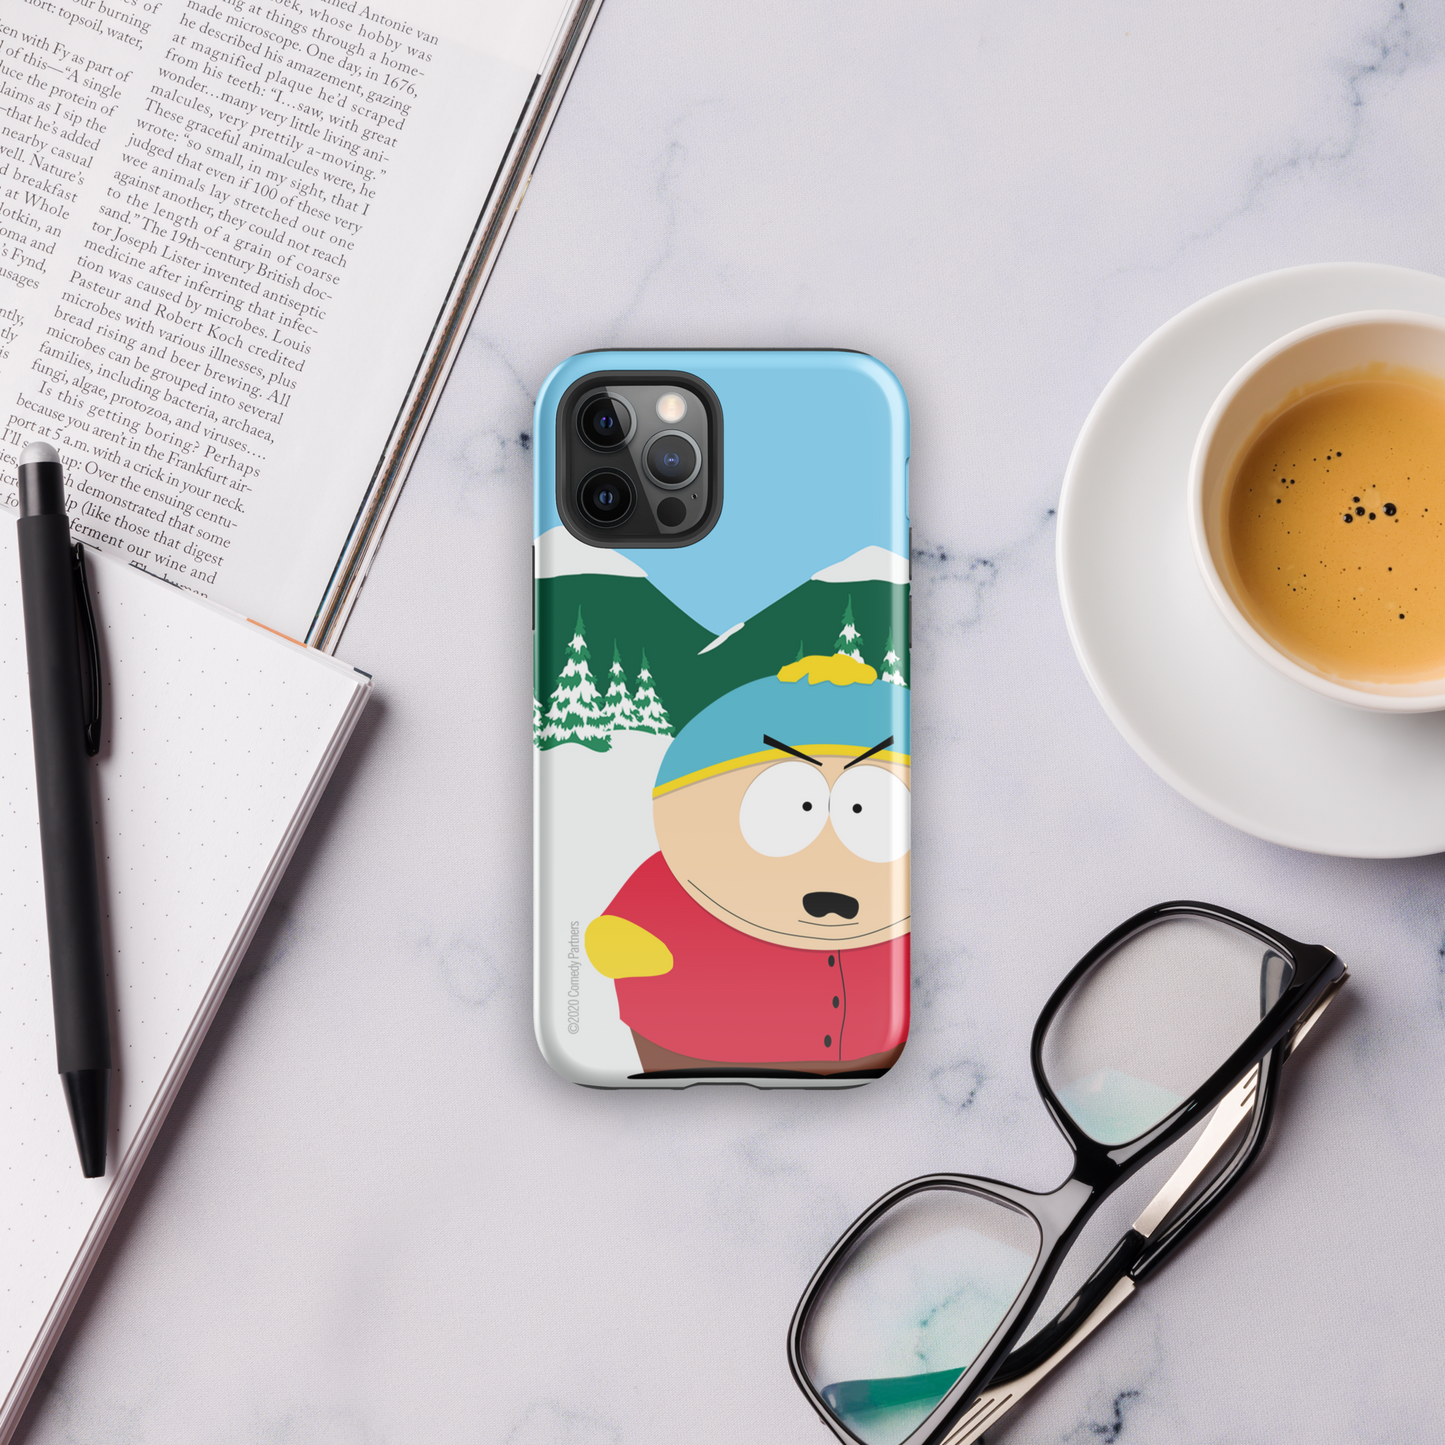 South Park Funda resistente Cartman - iPhone